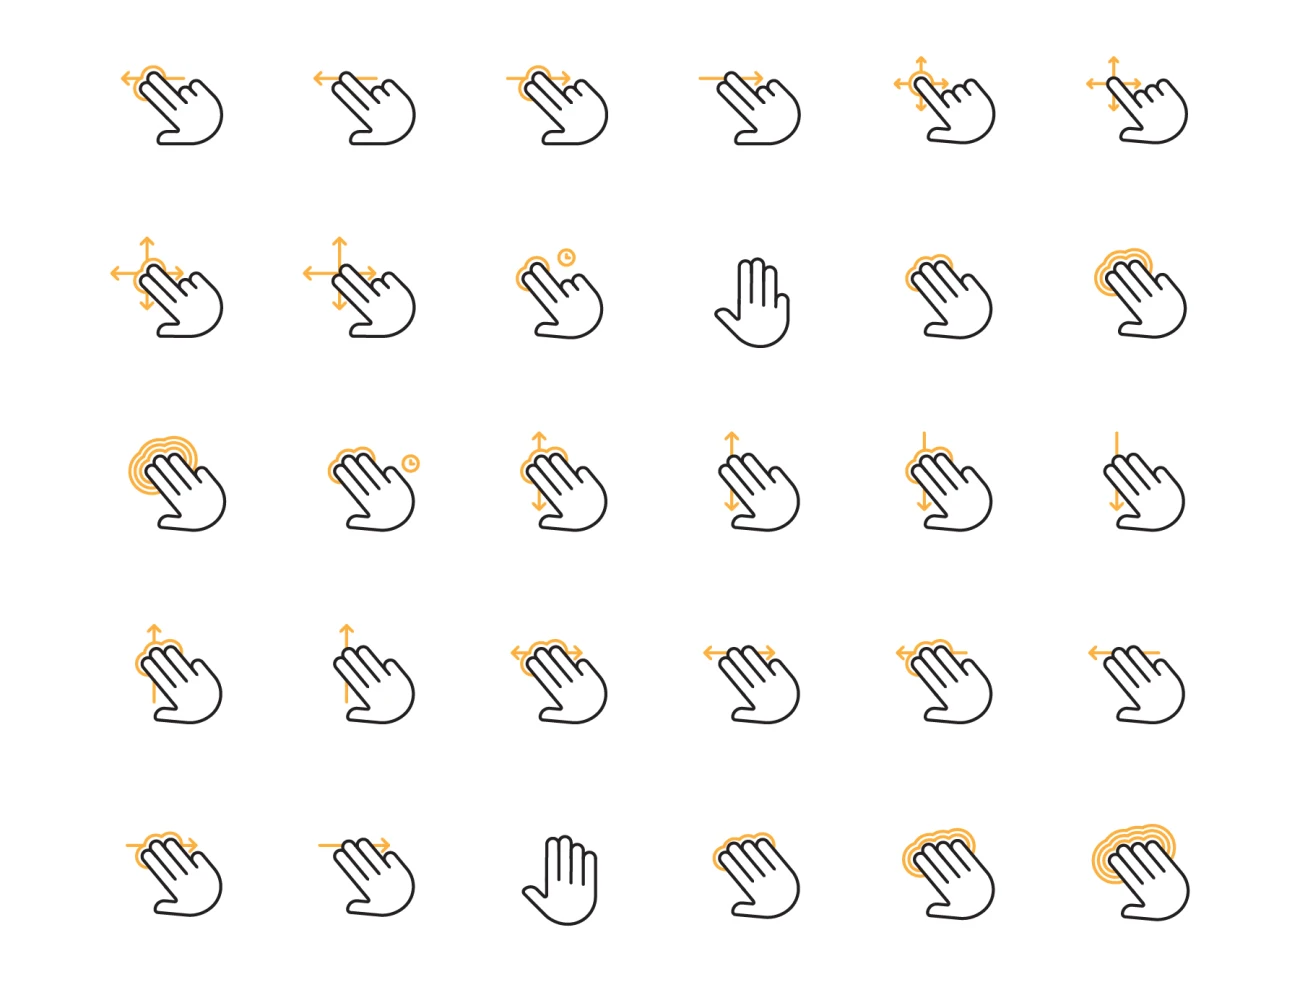 300款手势操作图标素材下载 300 Hand Gesture Icon Set .svg .png .jpeg-3D/图标-到位啦UI